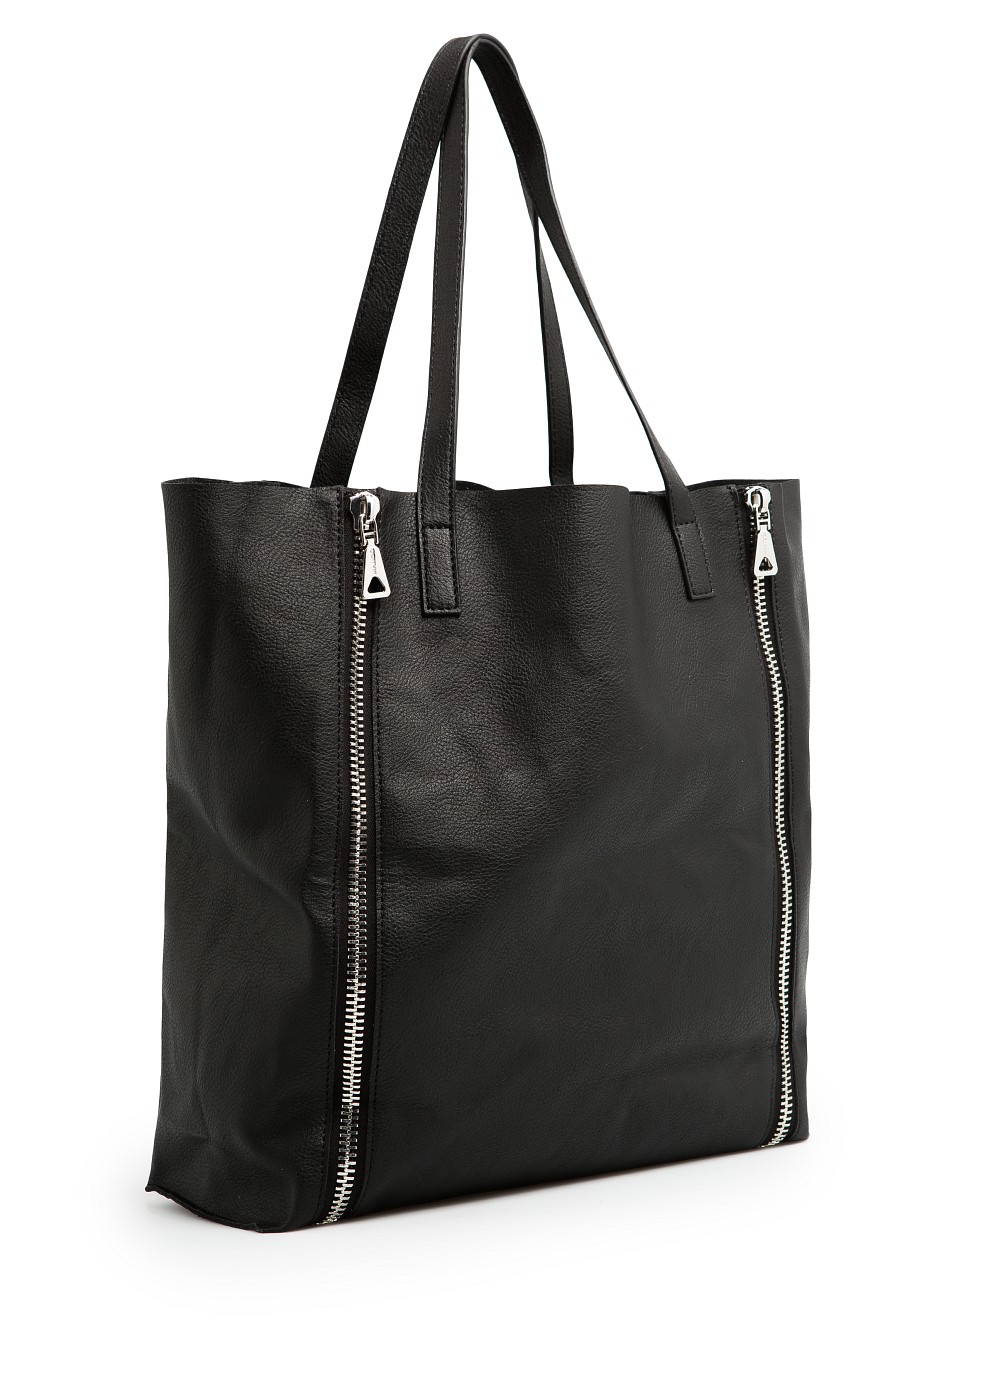 Lyst - Mango Zip Shopper Bag in Black